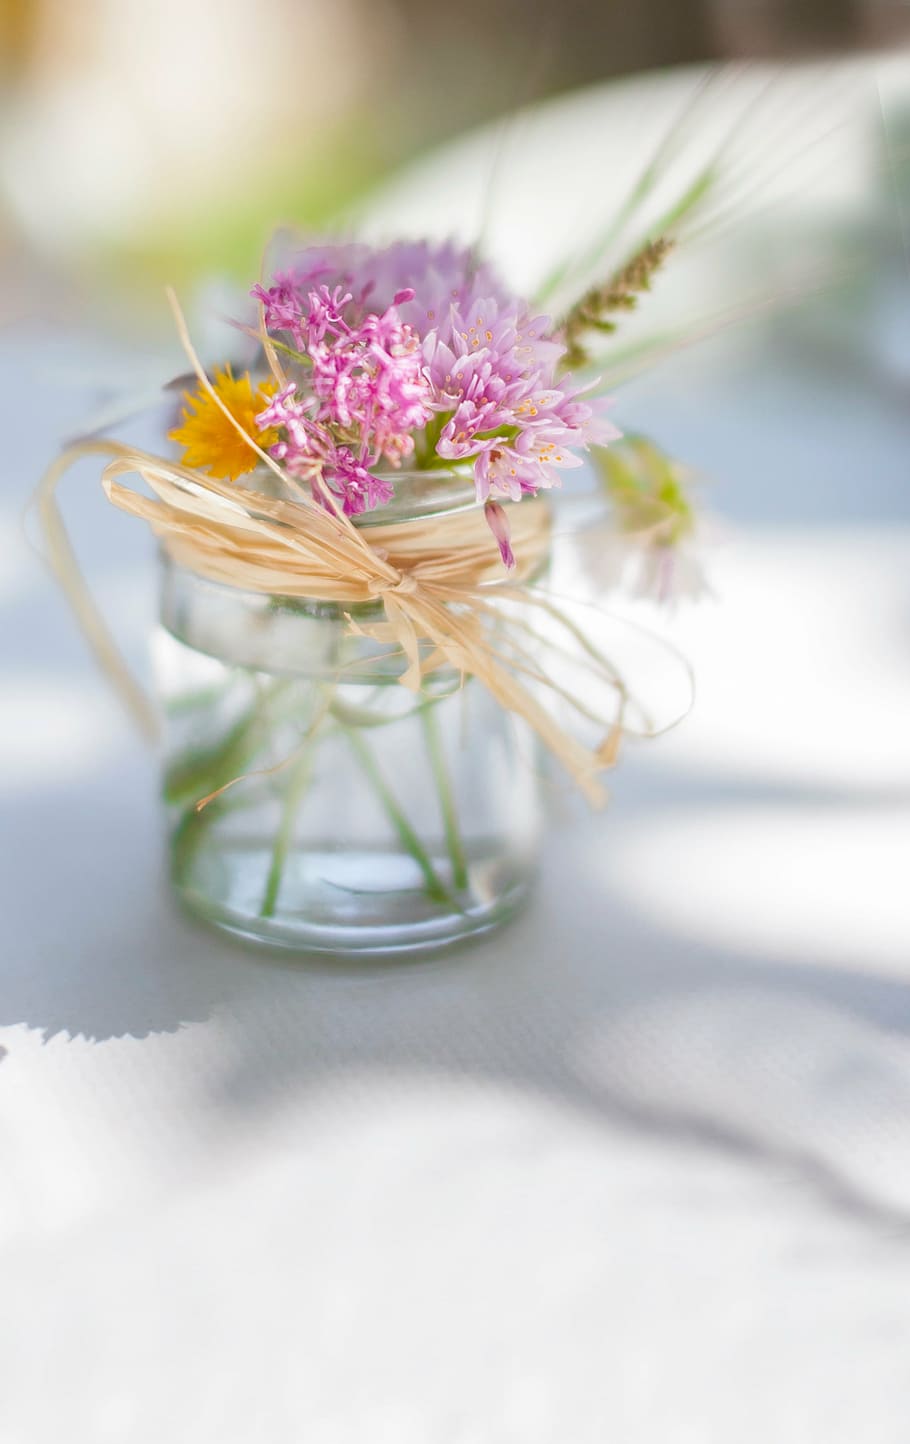 seletiva, fotografia de foco, rosa, flor de pétalas, claro, jarra de vidro, branco, superfície, flores, vidro